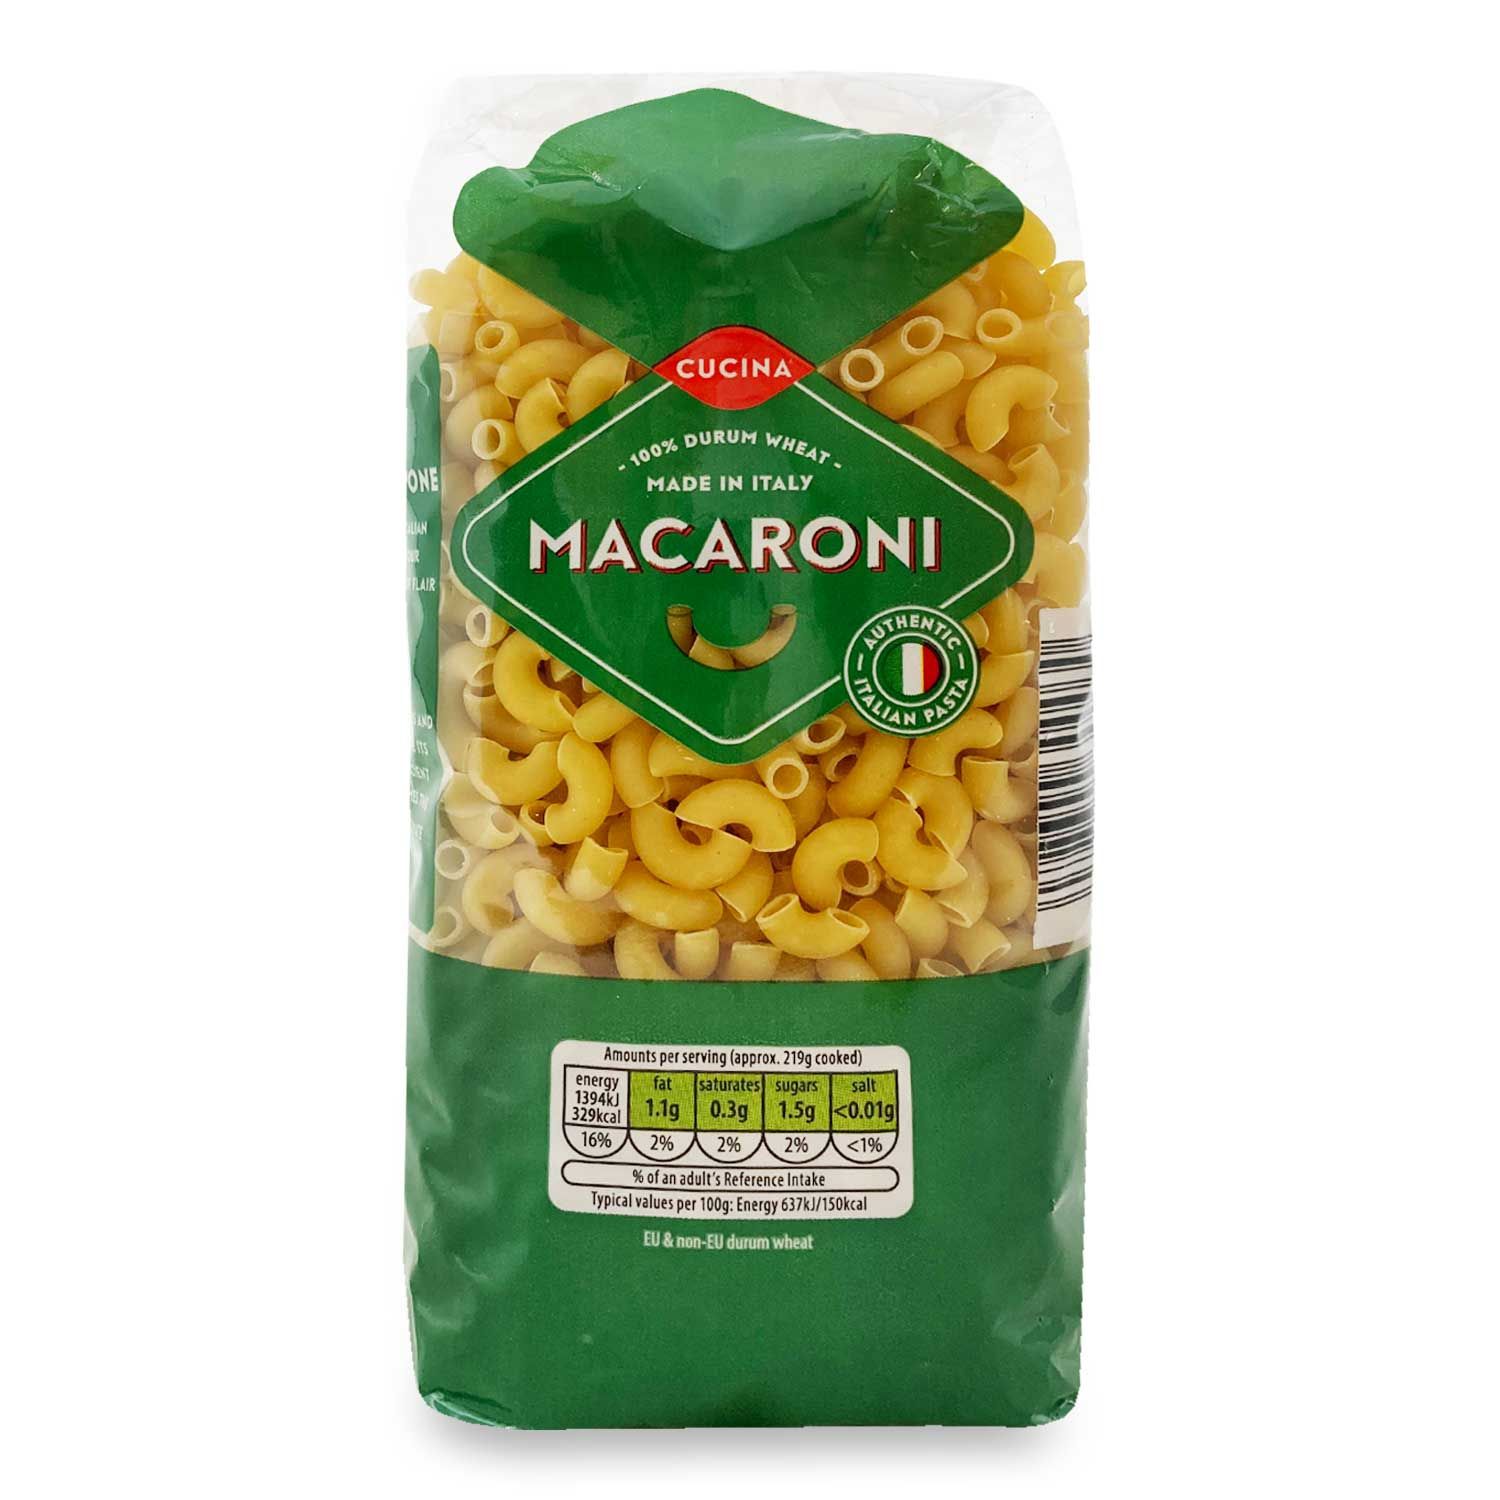 Cucina Macaroni Pasta 500g | ALDI